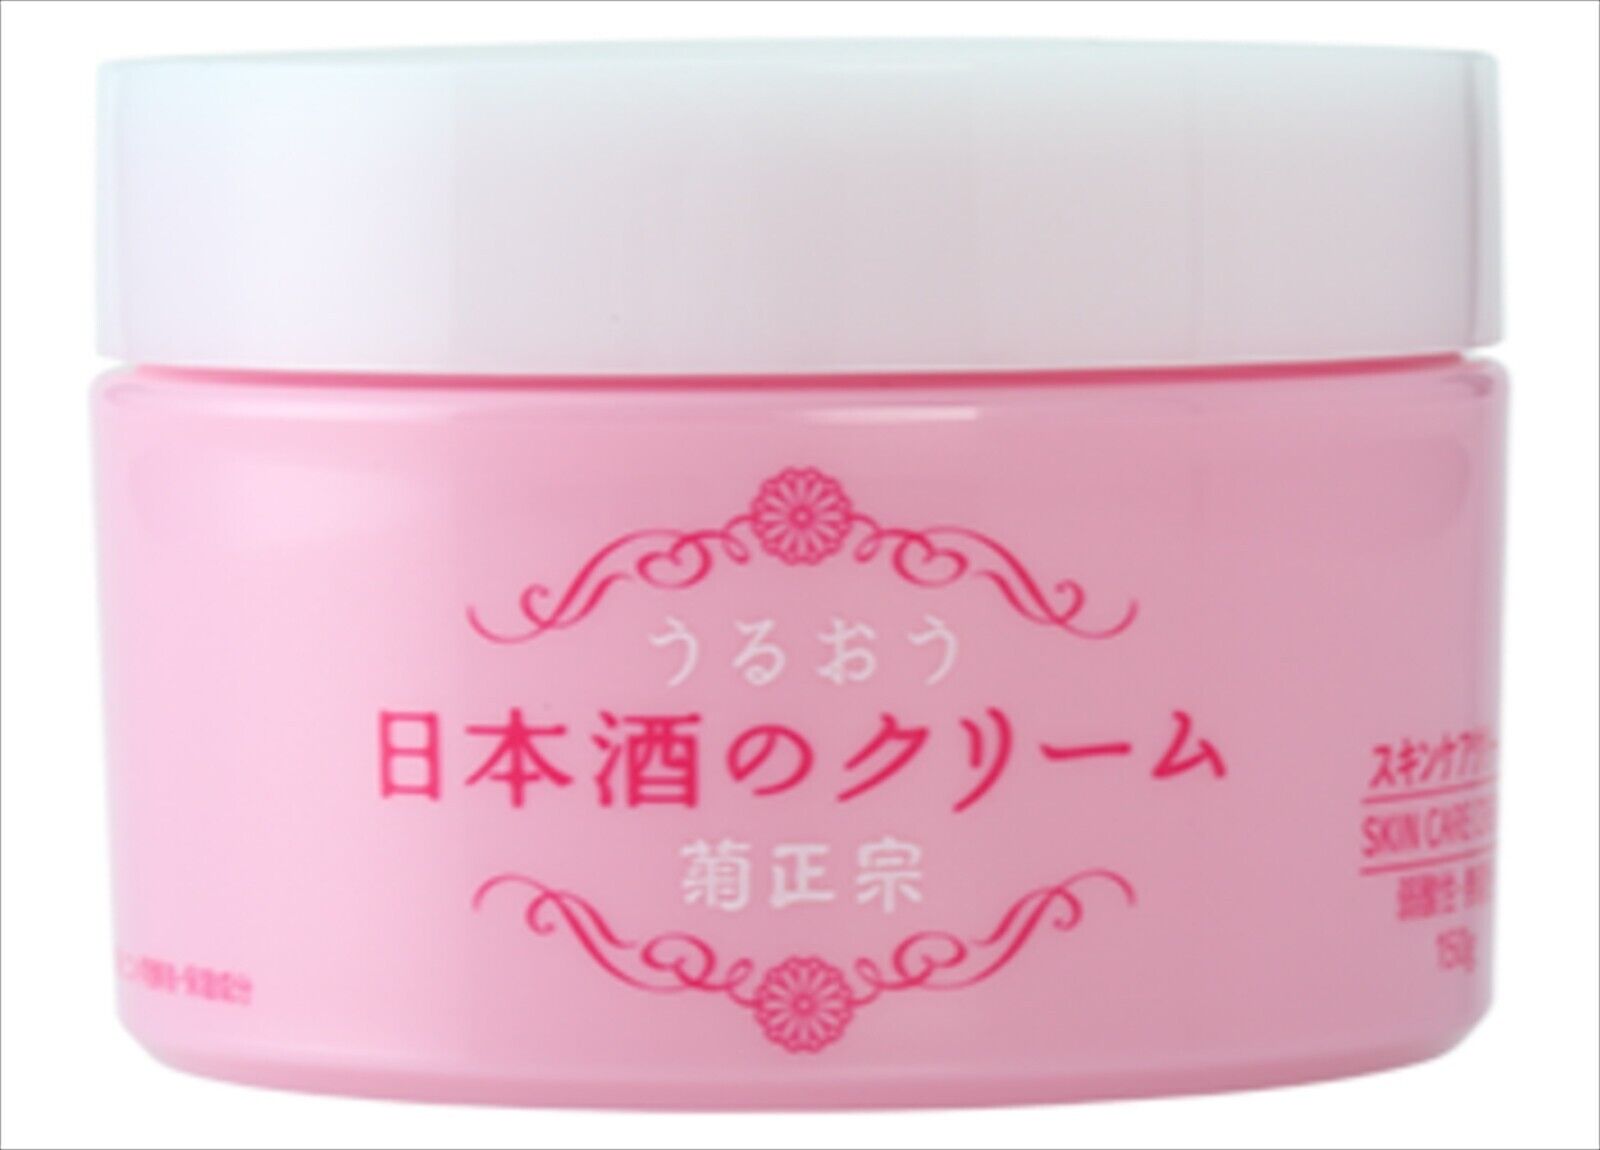 Kikumasamune Japanese Sake Skin Care Cream 150g / 5.29oz (from US warehouse)